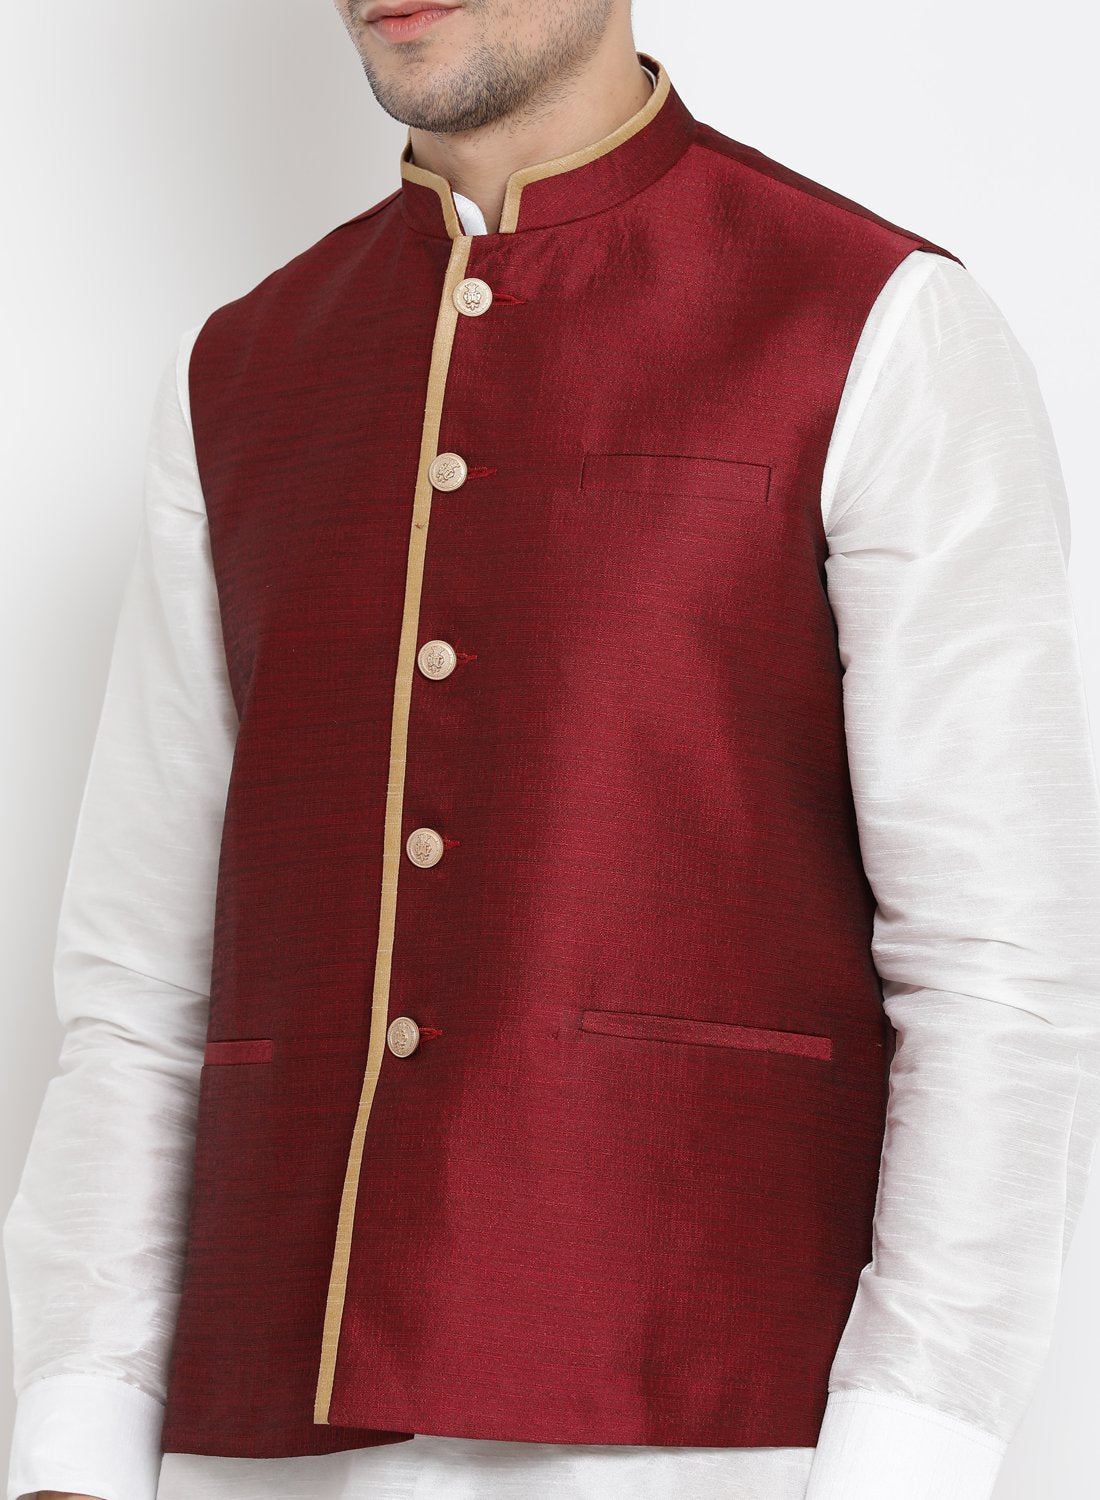 Men's Maroon Cotton Silk Blend Ethnic Jacket